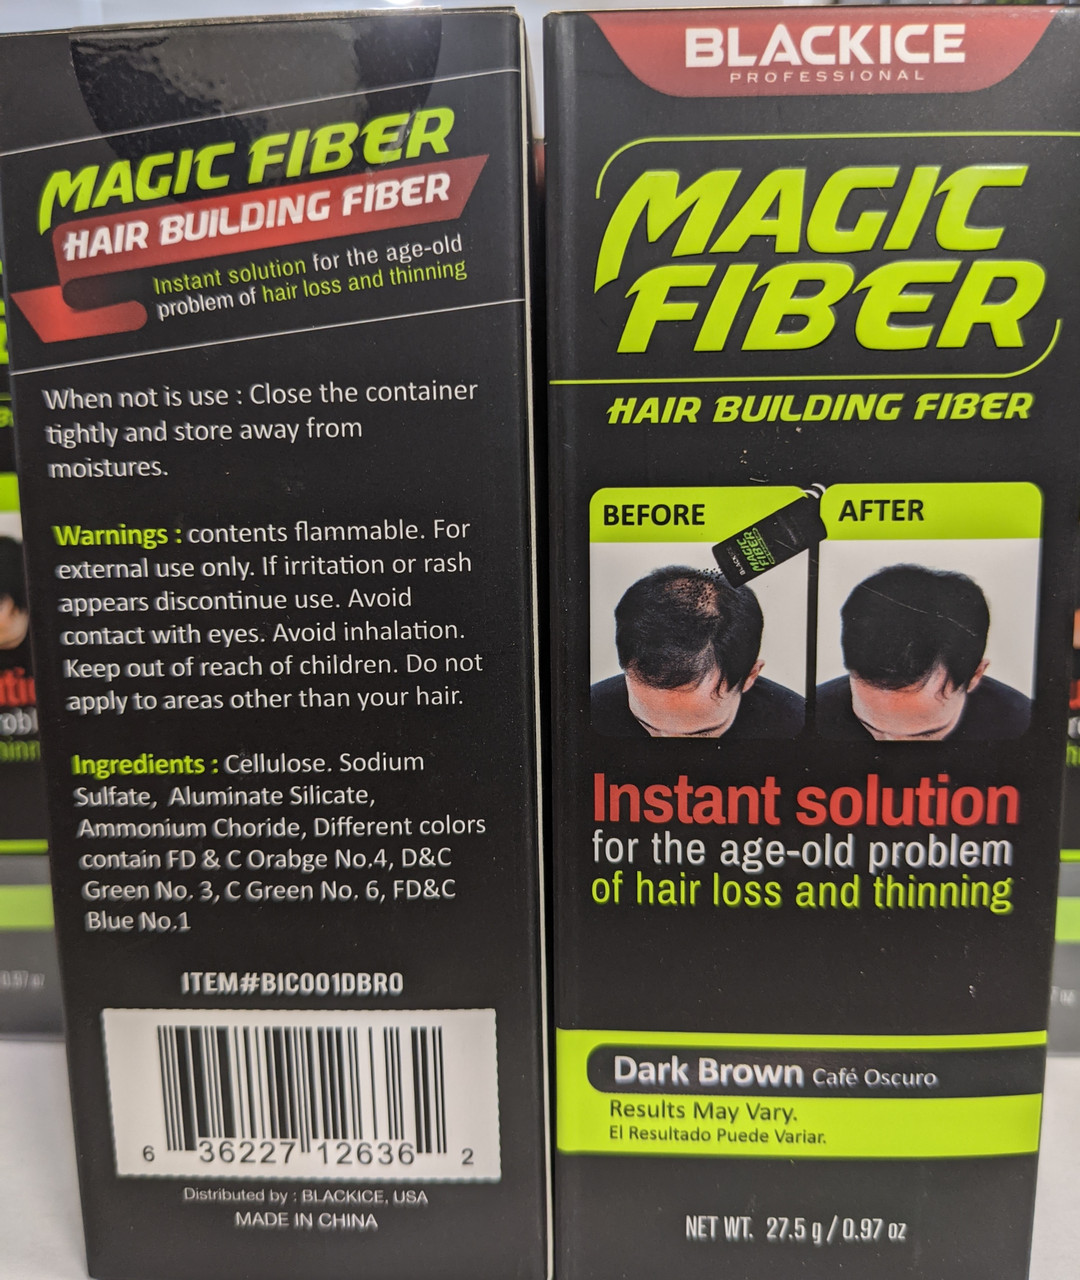 BLACK ICE MAGIC HAIR FIBER - DARK BROWN 22G. – True Barber Supply